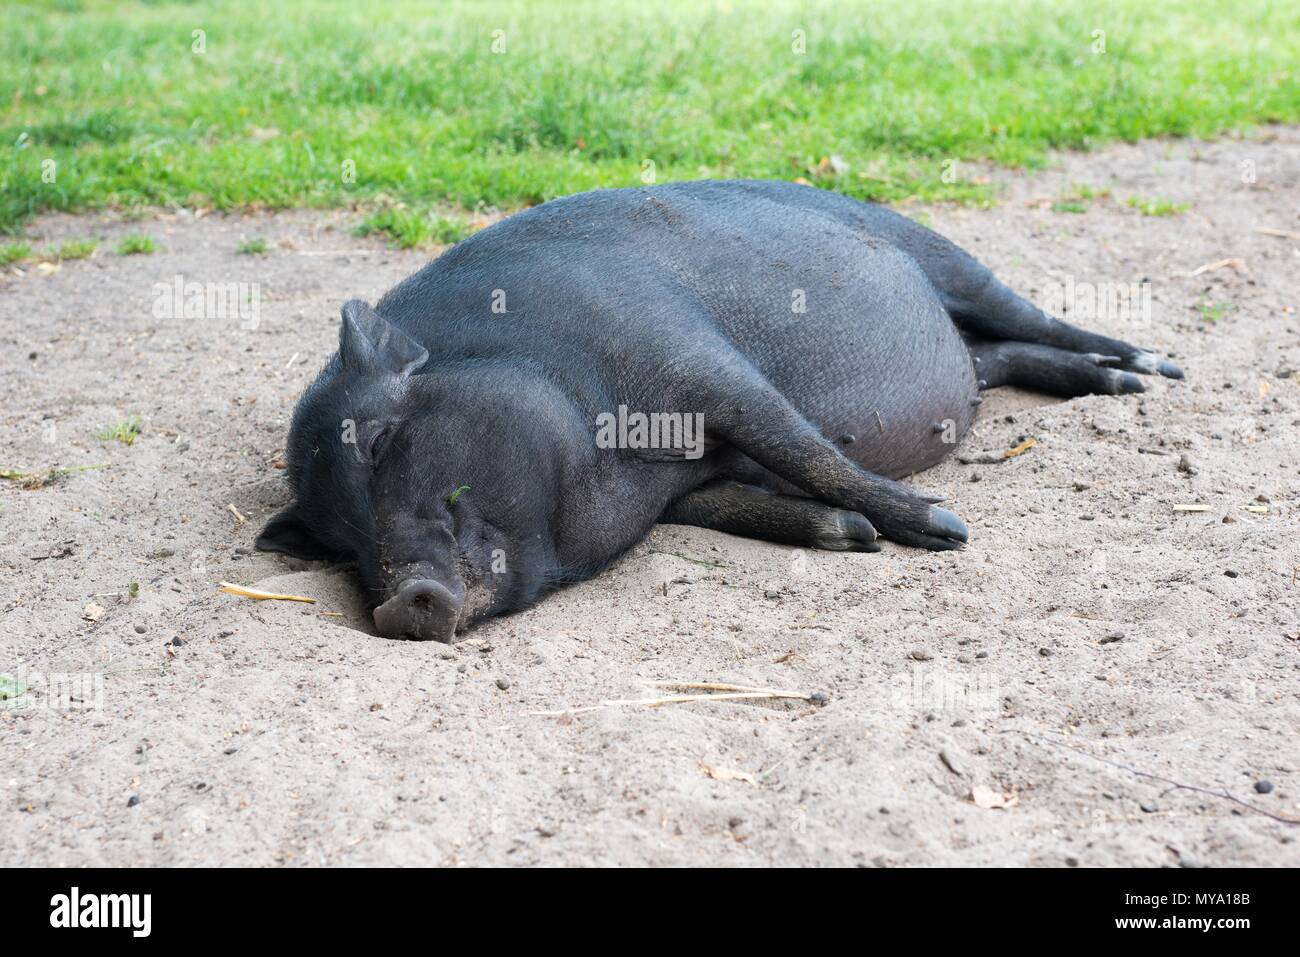 Black mini pig, pot-bellied pig, sleeps happily in the sand, Mecklenburg-Western Pomerania, Germany Stock Photo